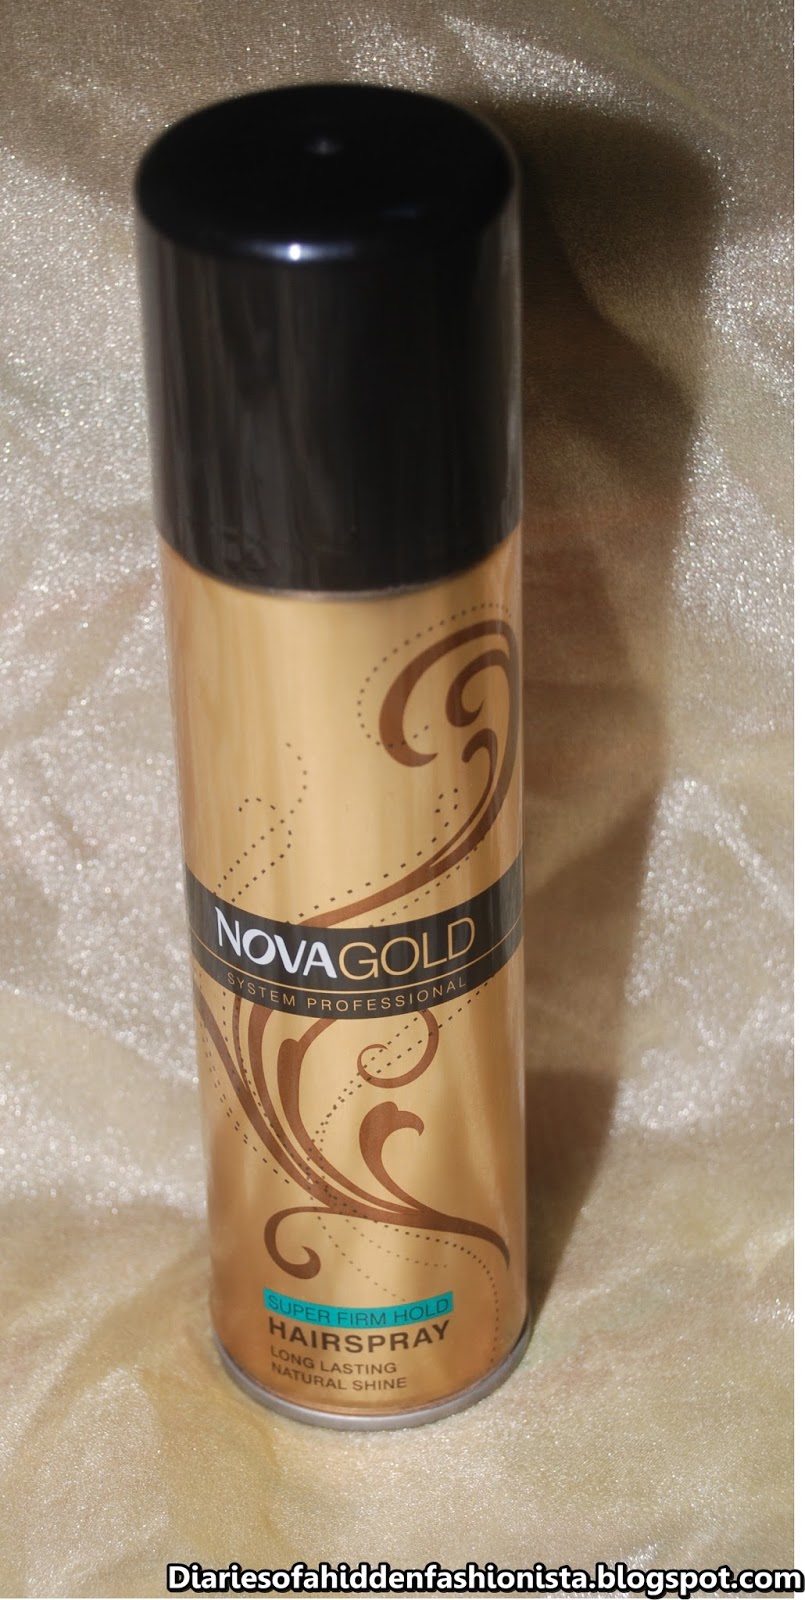 Nova Gold Super Firm Hold Hair Spray - (Review) - The Bold Lipstick